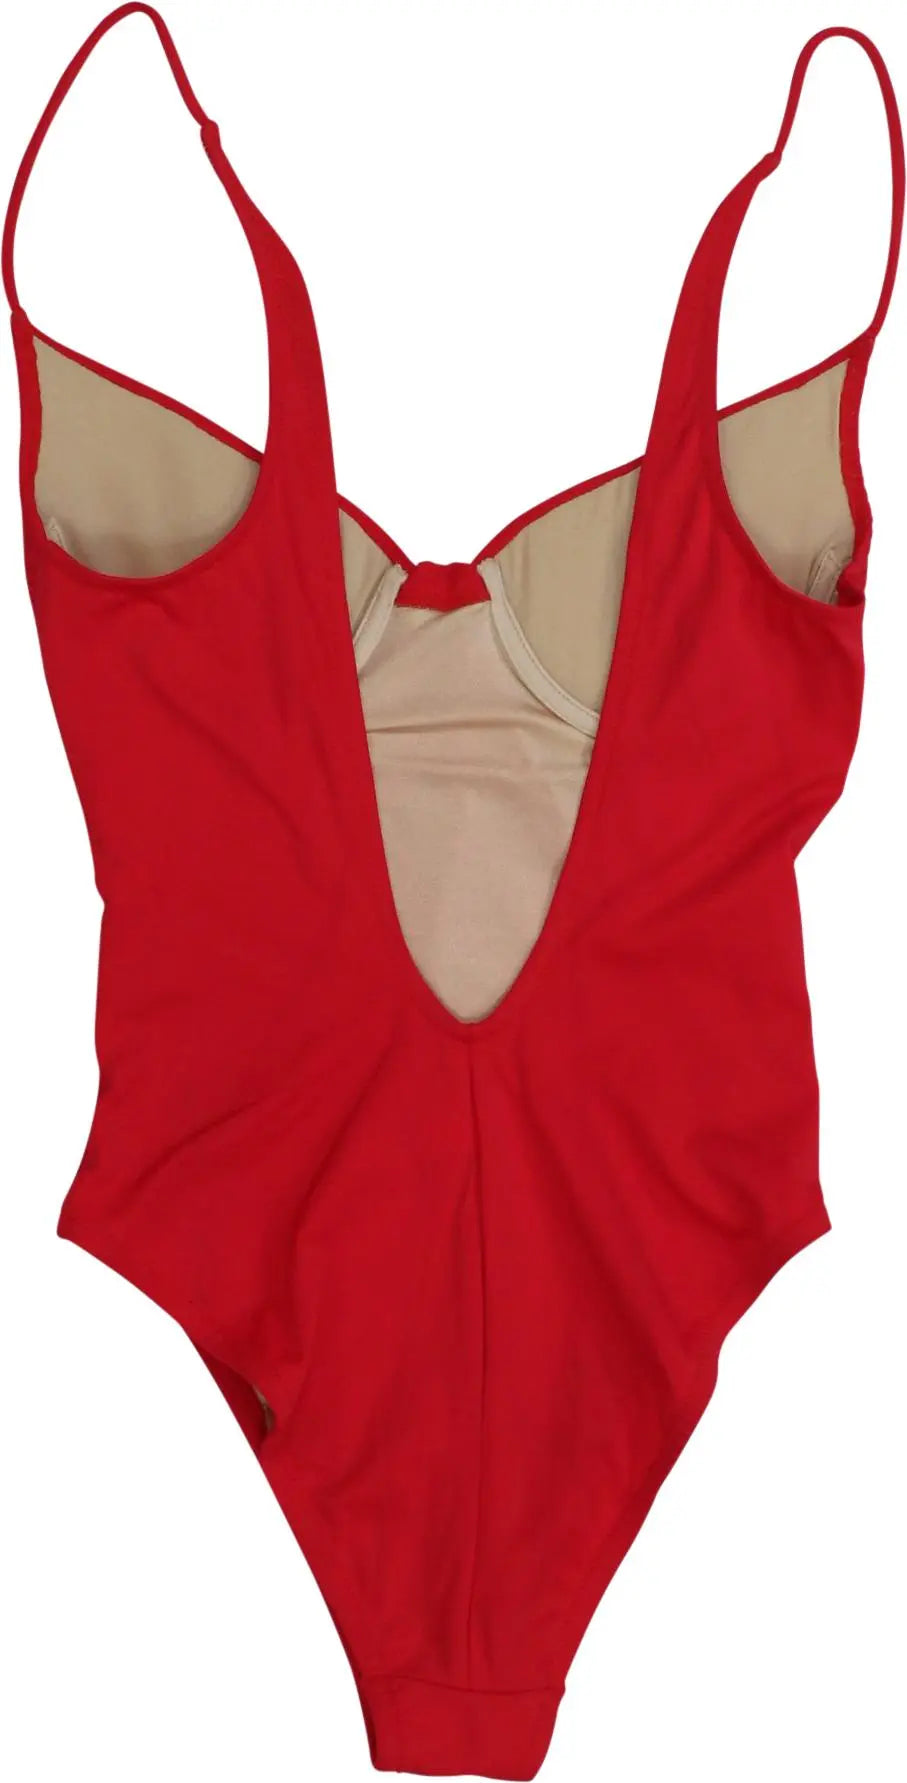 La Perla - Red Swimsuit by La Perla- ThriftTale.com - Vintage and second handclothing